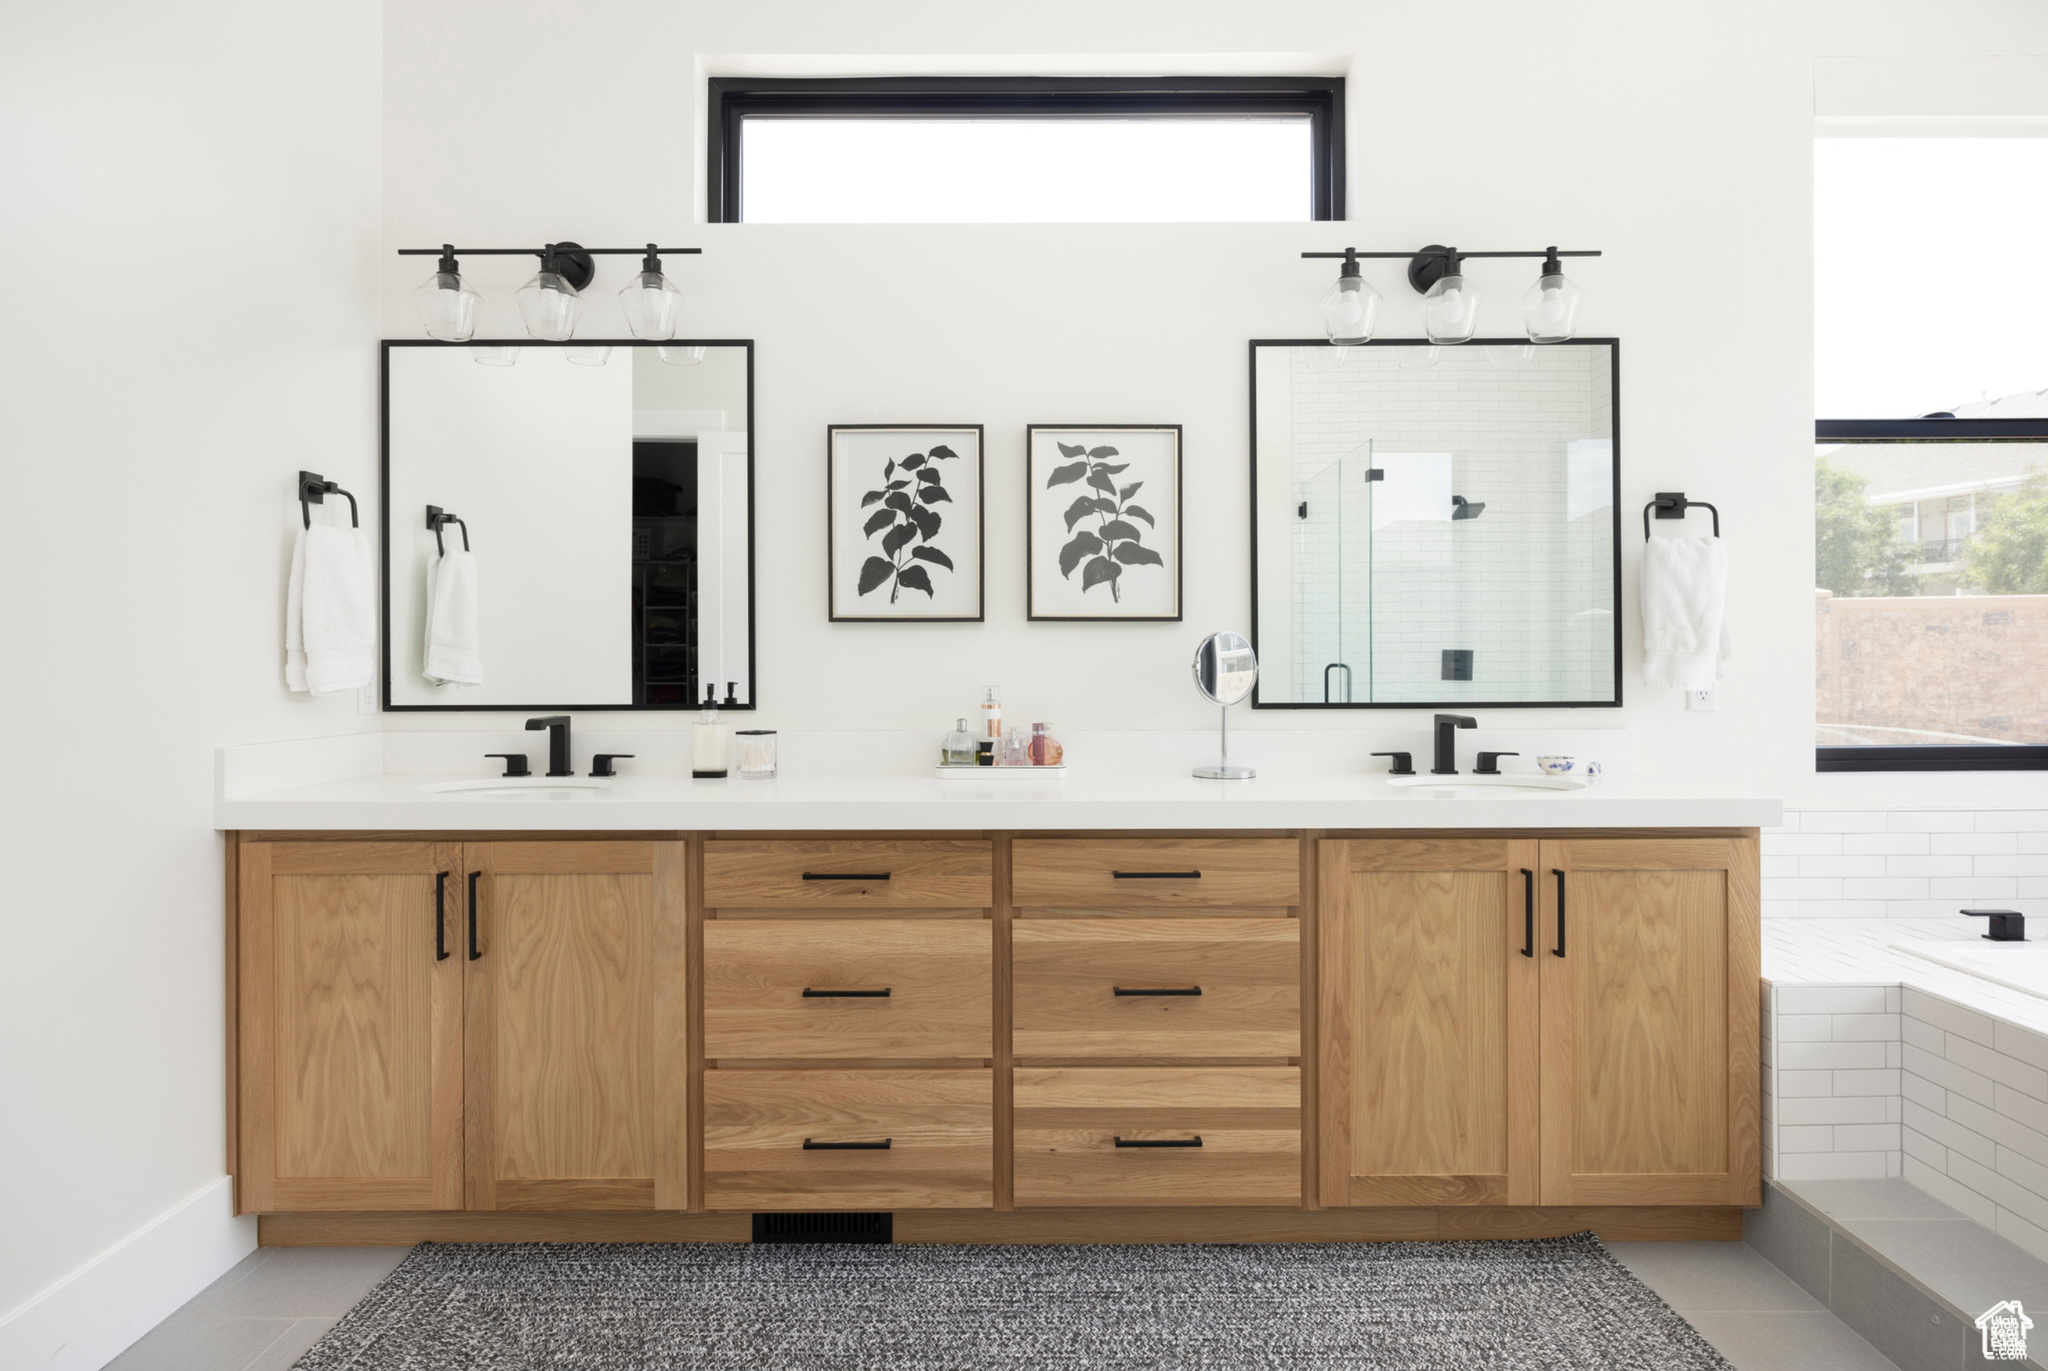 Bathroom featuring tile flooring, double sink vanity, and tiled bath